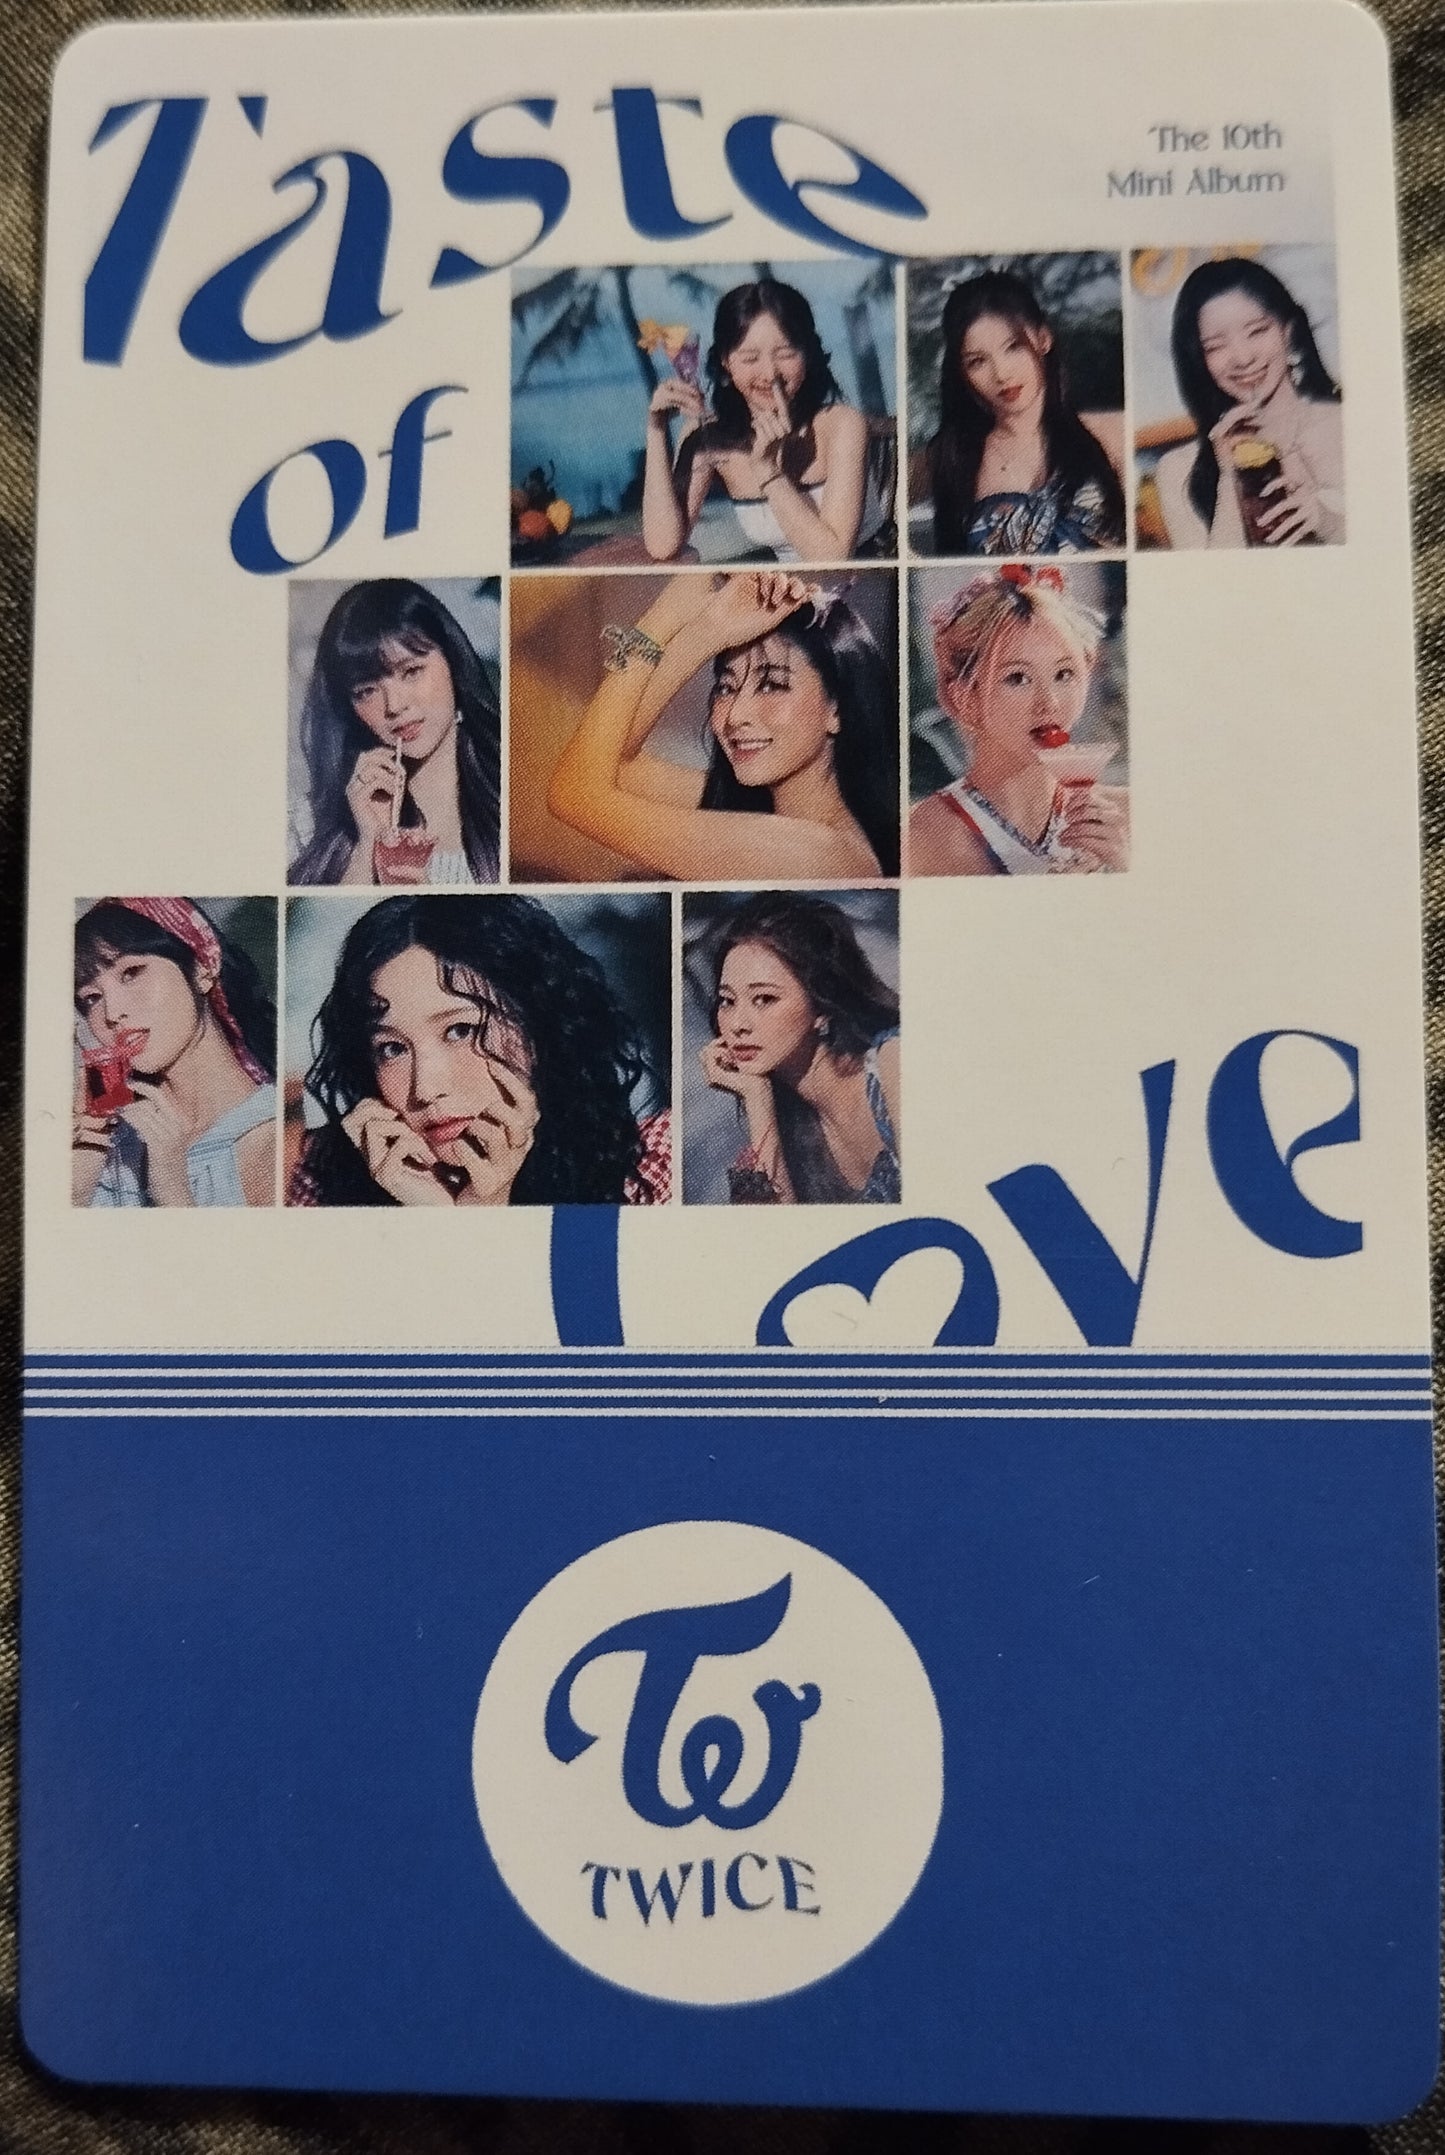 Photocard  TWICE  Taste of love  The 10th mini album  Jihyo